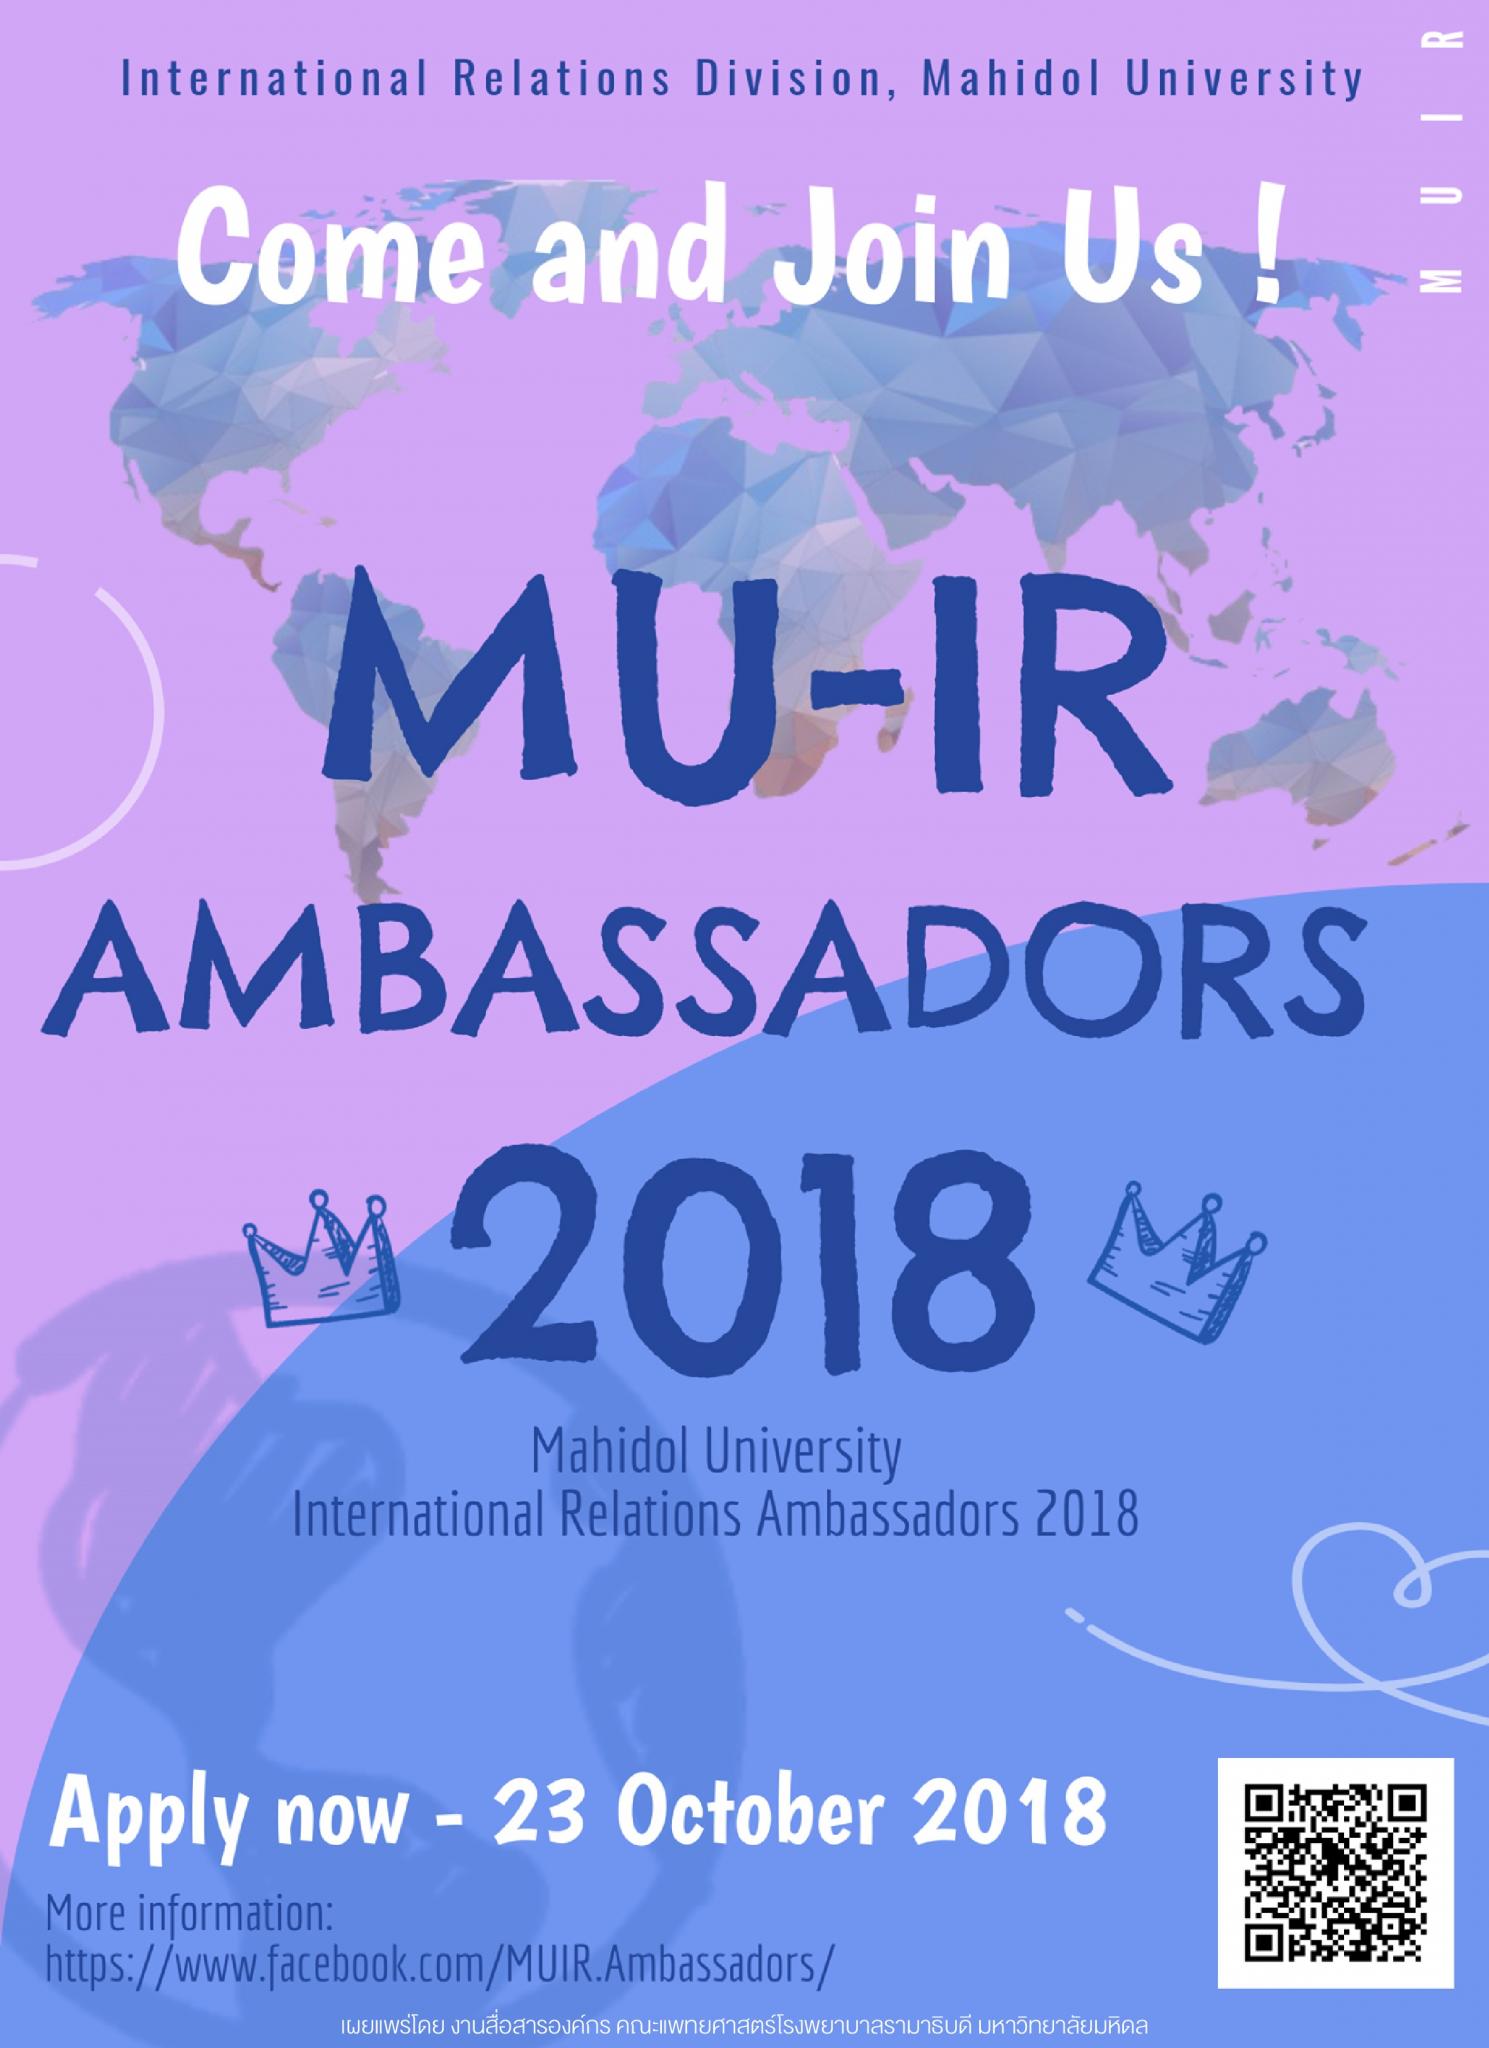 MU-IR AMBASSADORS 2018